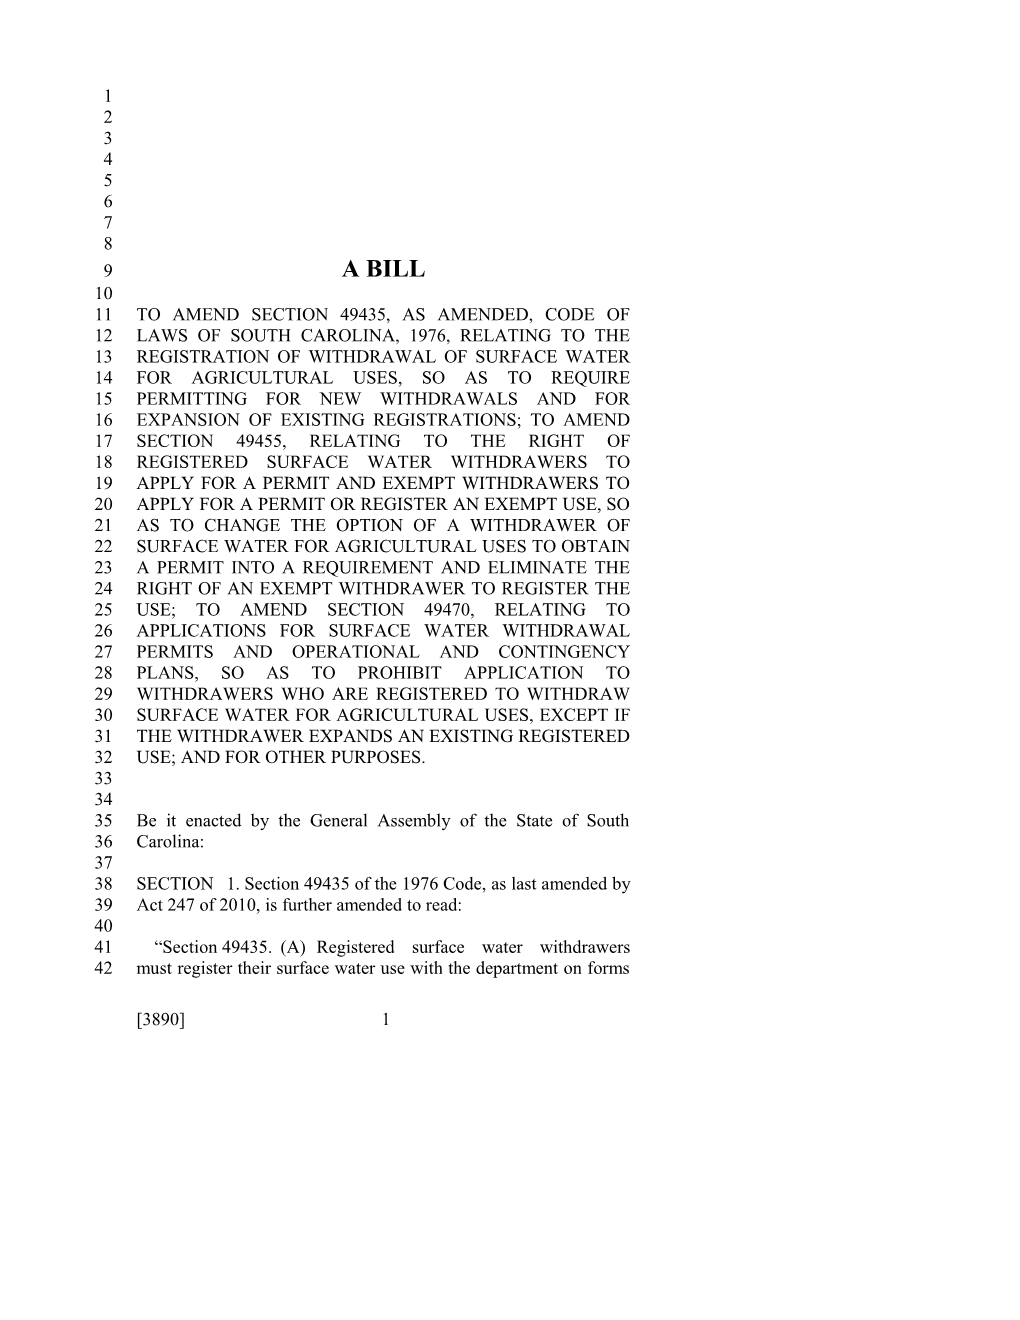 2017-2018 Bill 3890 Text of Previous Version (Mar. 2, 2017) - South Carolina Legislature Online